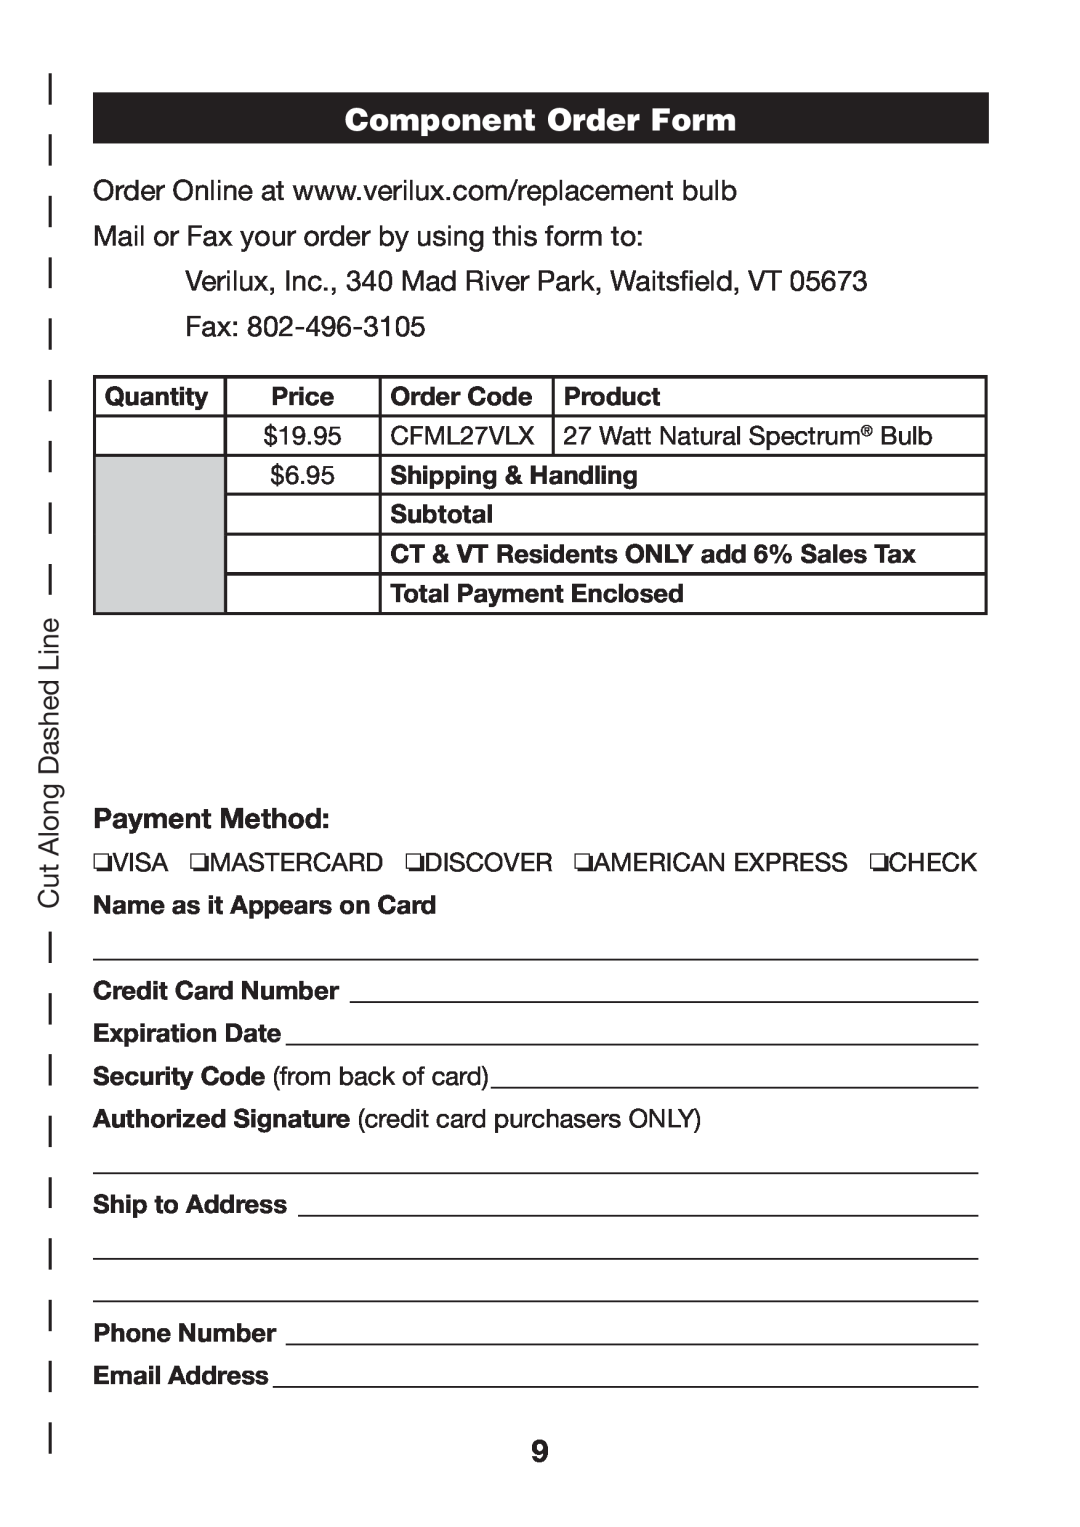 Verilux VD12 manual Component Order Form, Payment Method 